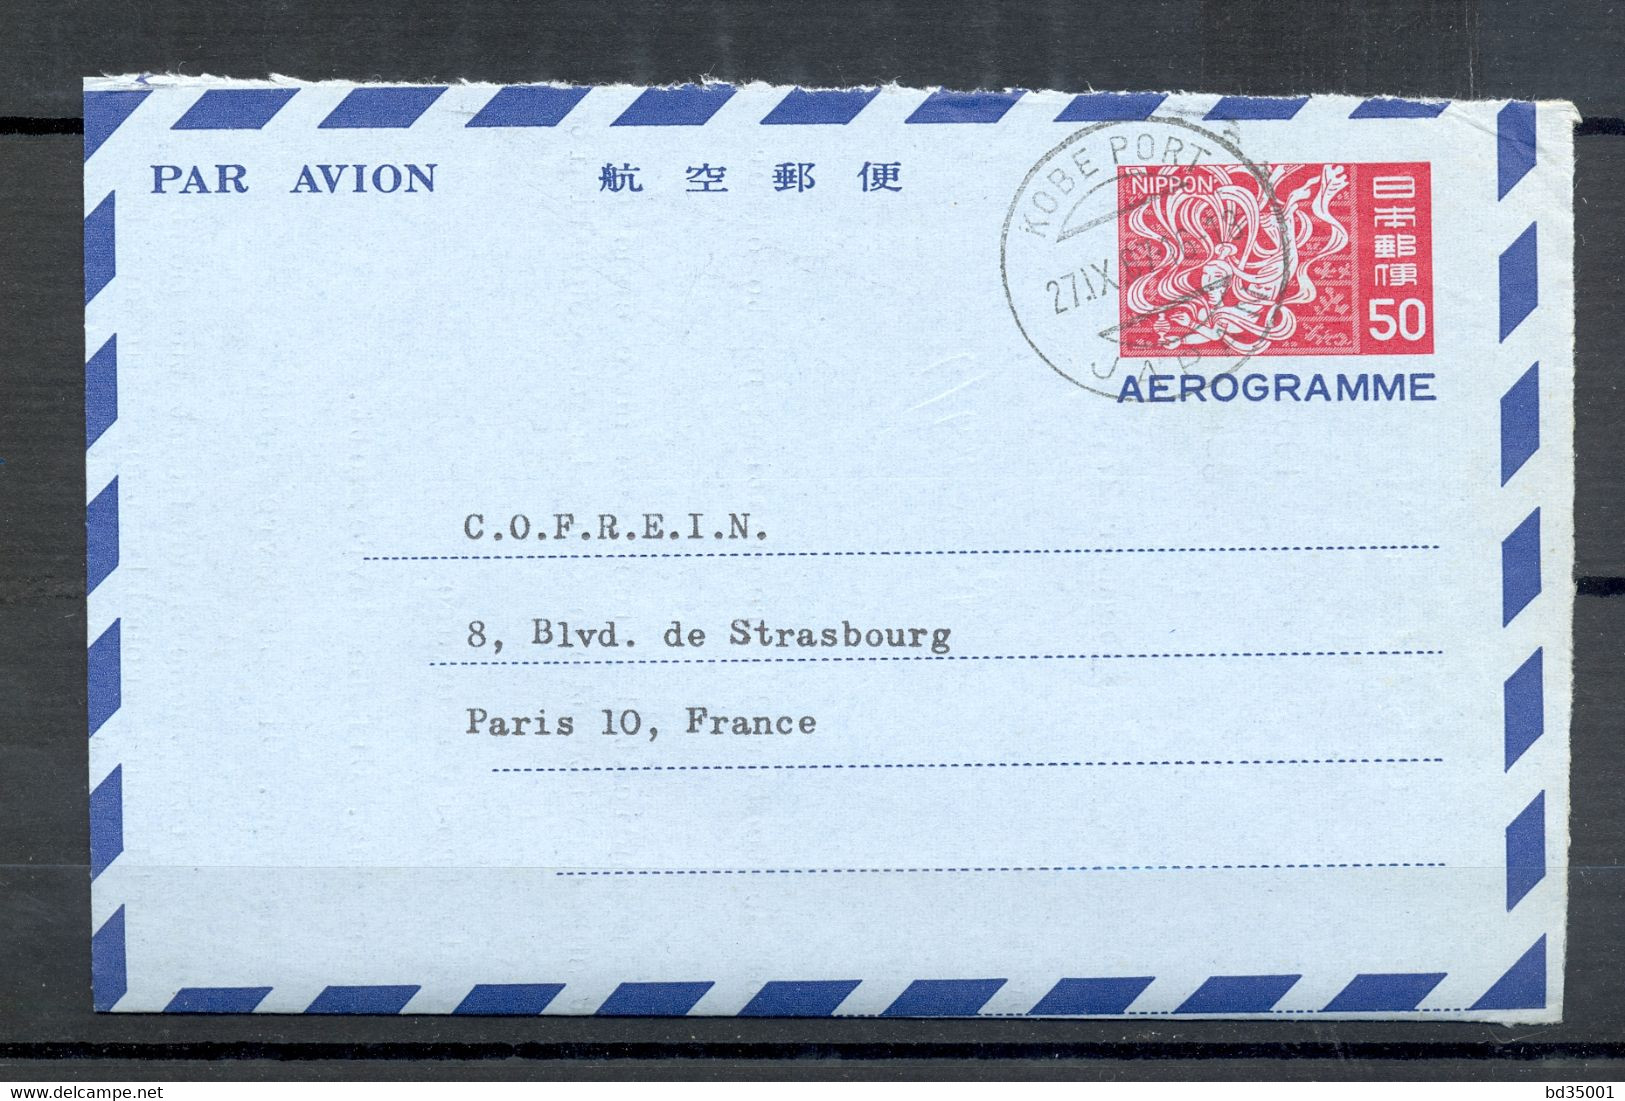 AEROGRAMME - AIR LETTER - JAPON - JAPON - 1967 - KOBE PORT VERS PARIS - (6) - Aérogrammes